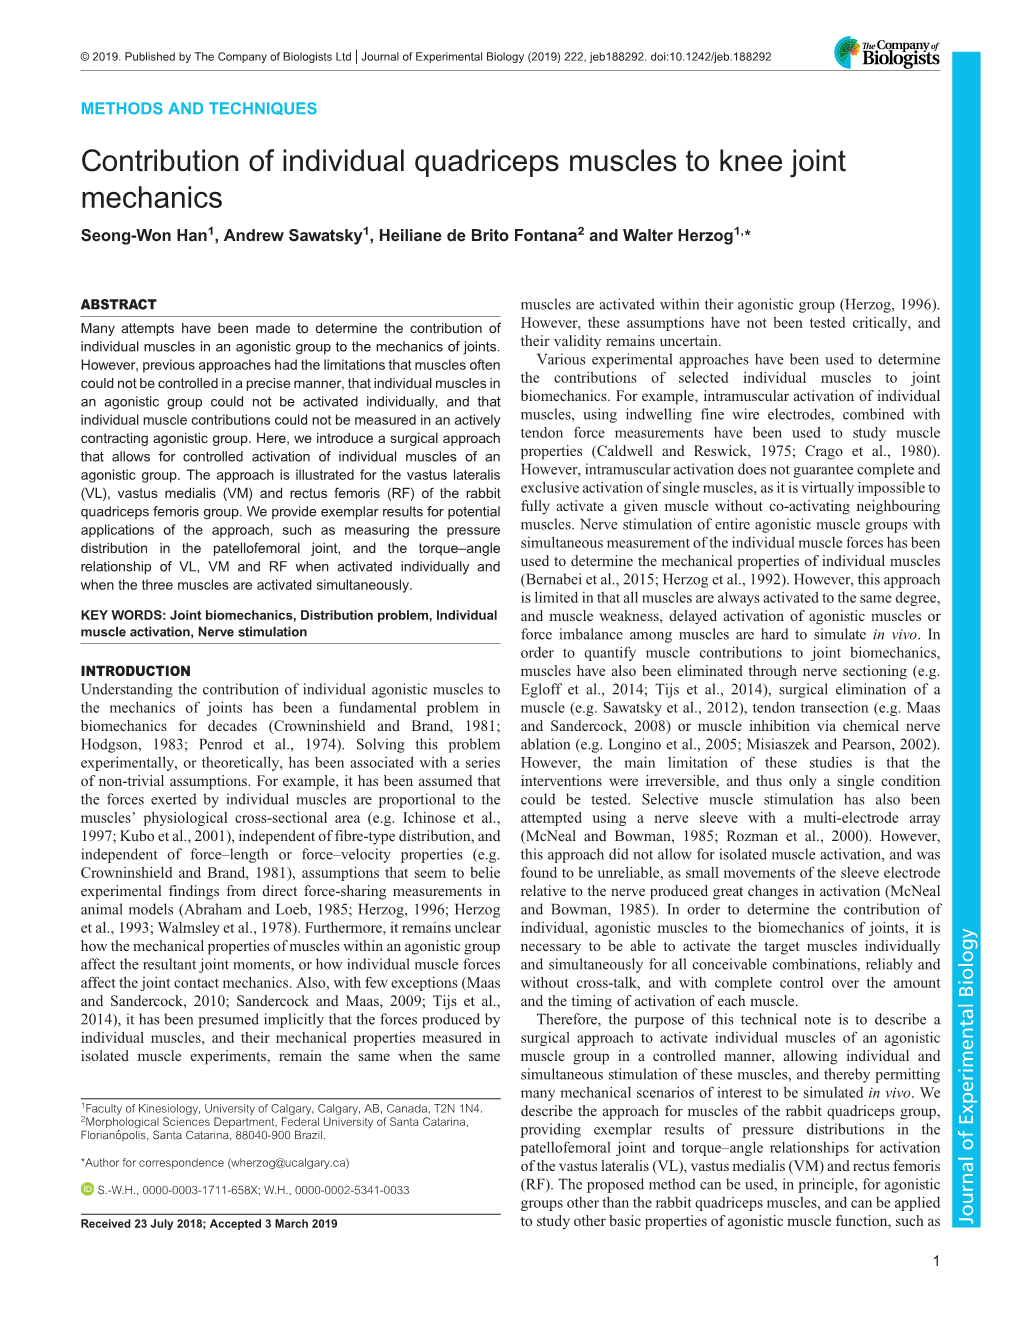 Contribution of Individual Quadriceps Muscles to Knee Joint Mechanics Seong-Won Han1, Andrew Sawatsky1, Heiliane De Brito Fontana2 and Walter Herzog1,*